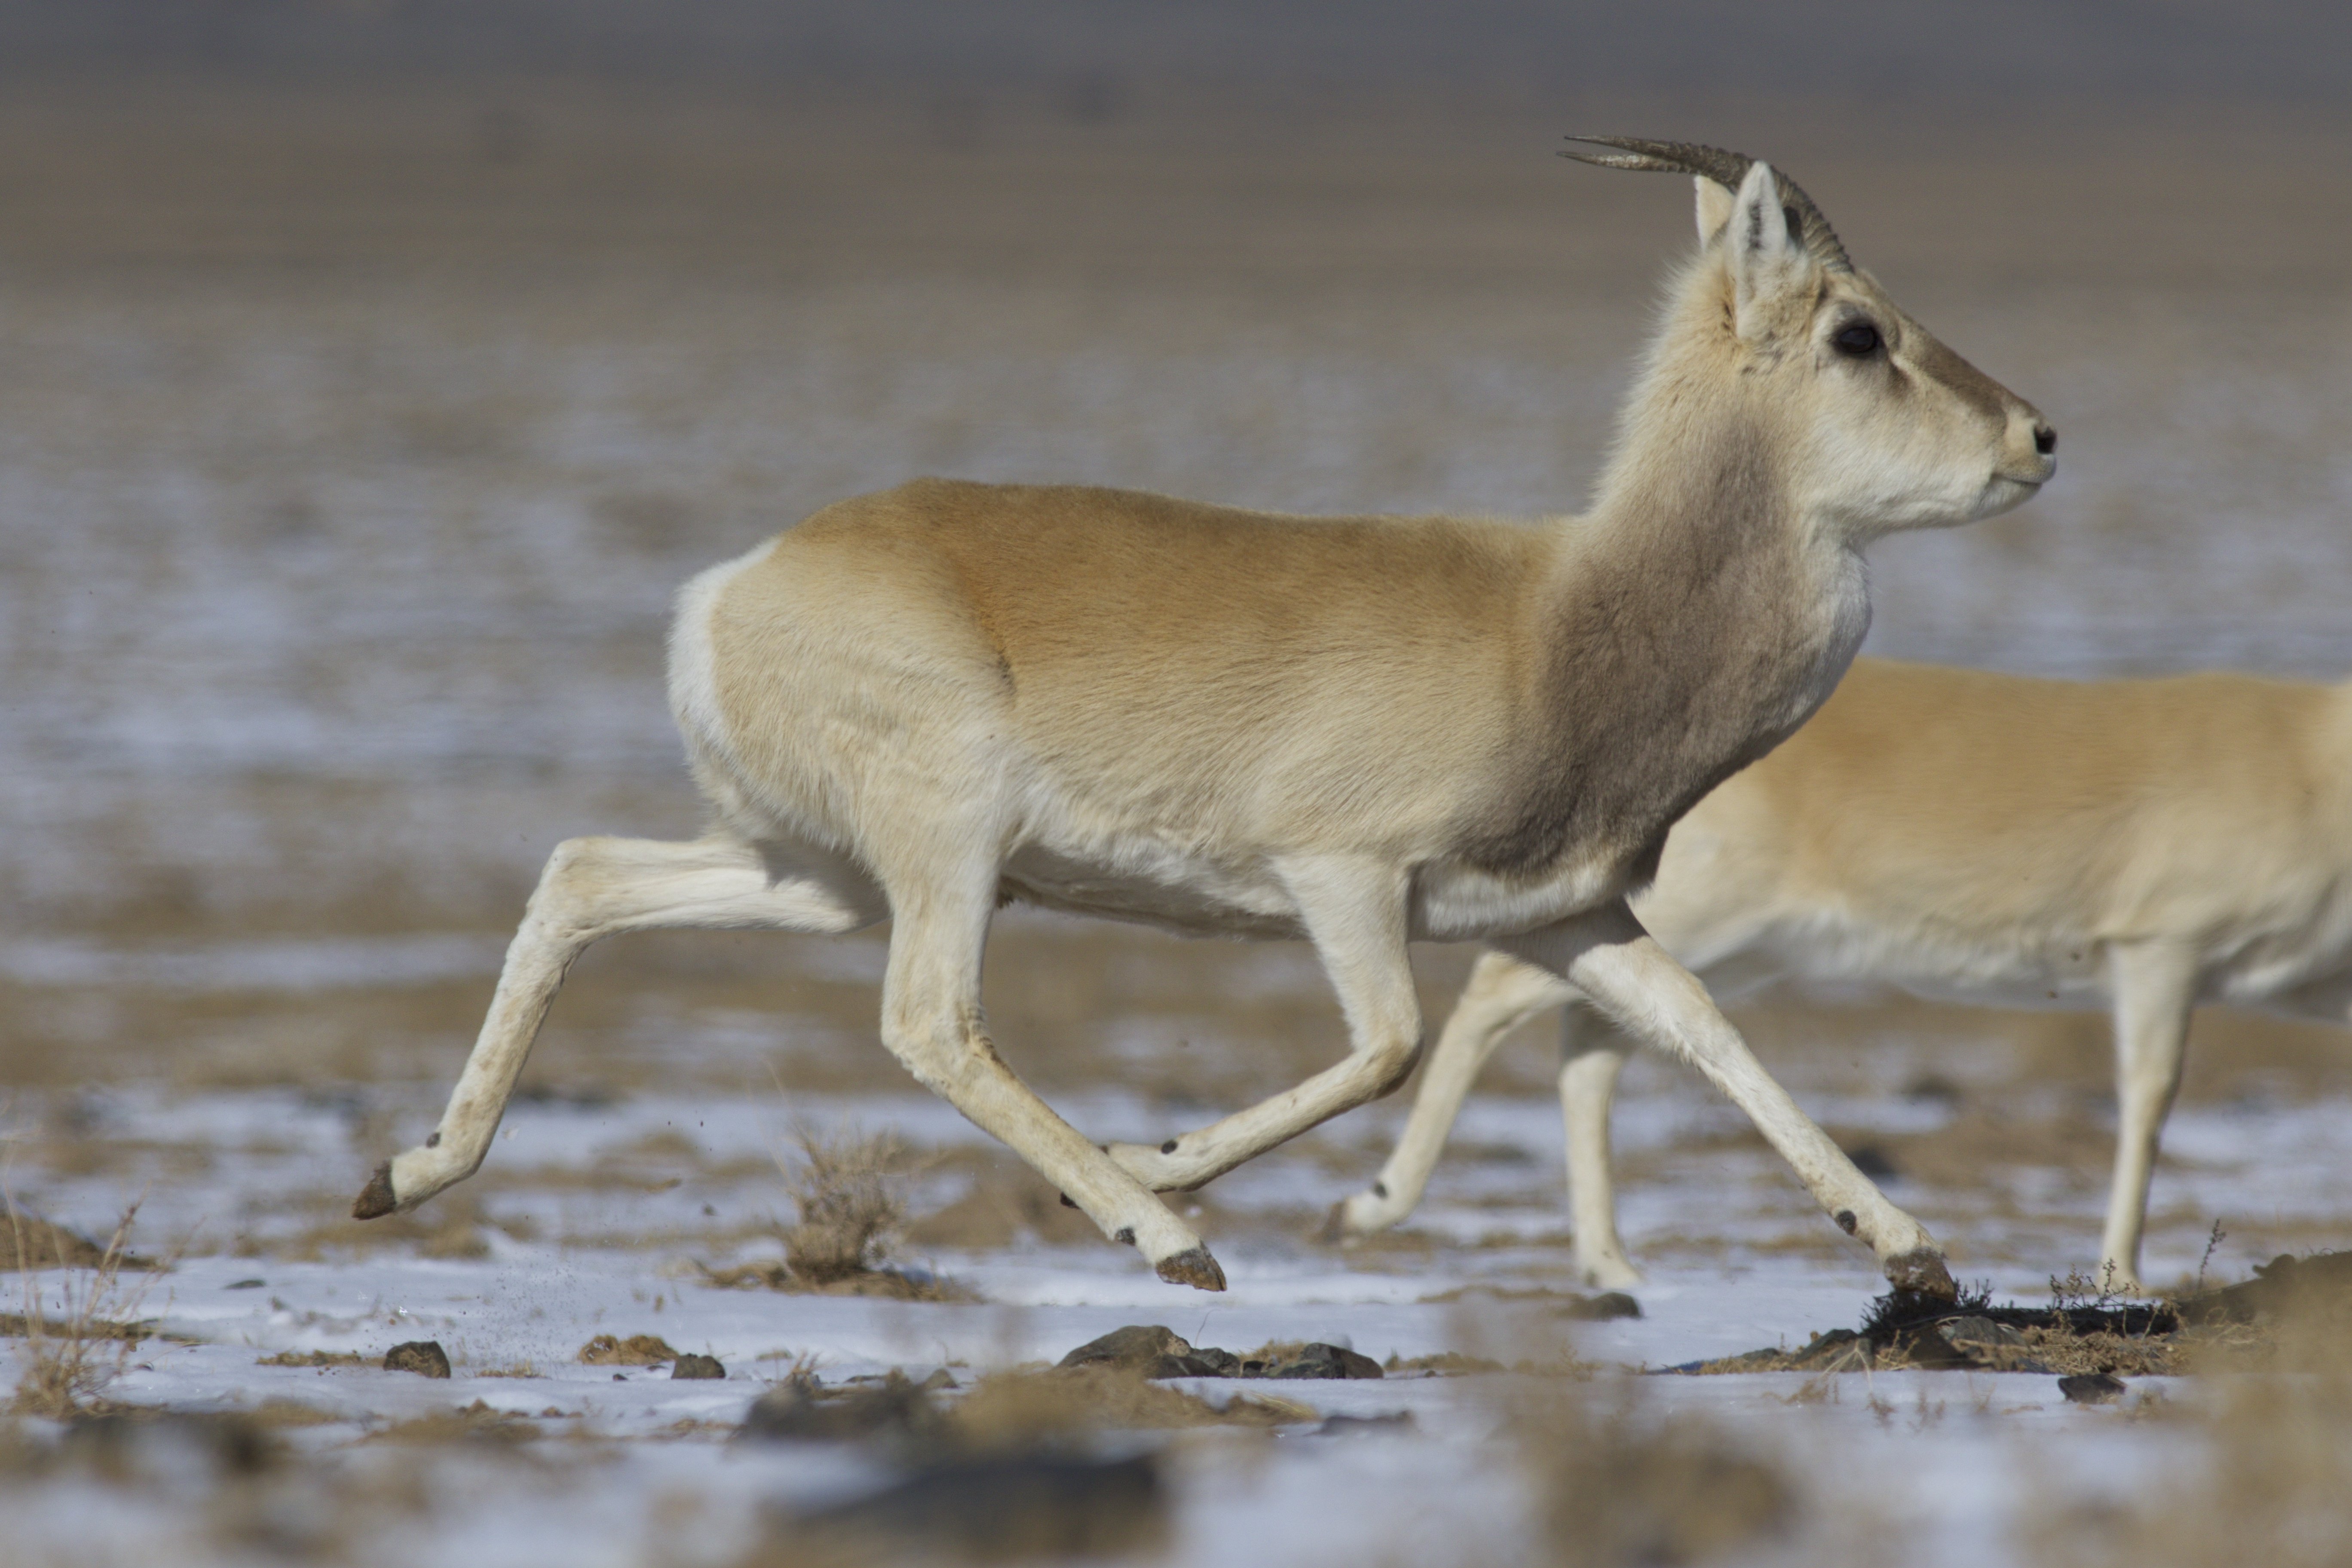 Mongolian gazelle male